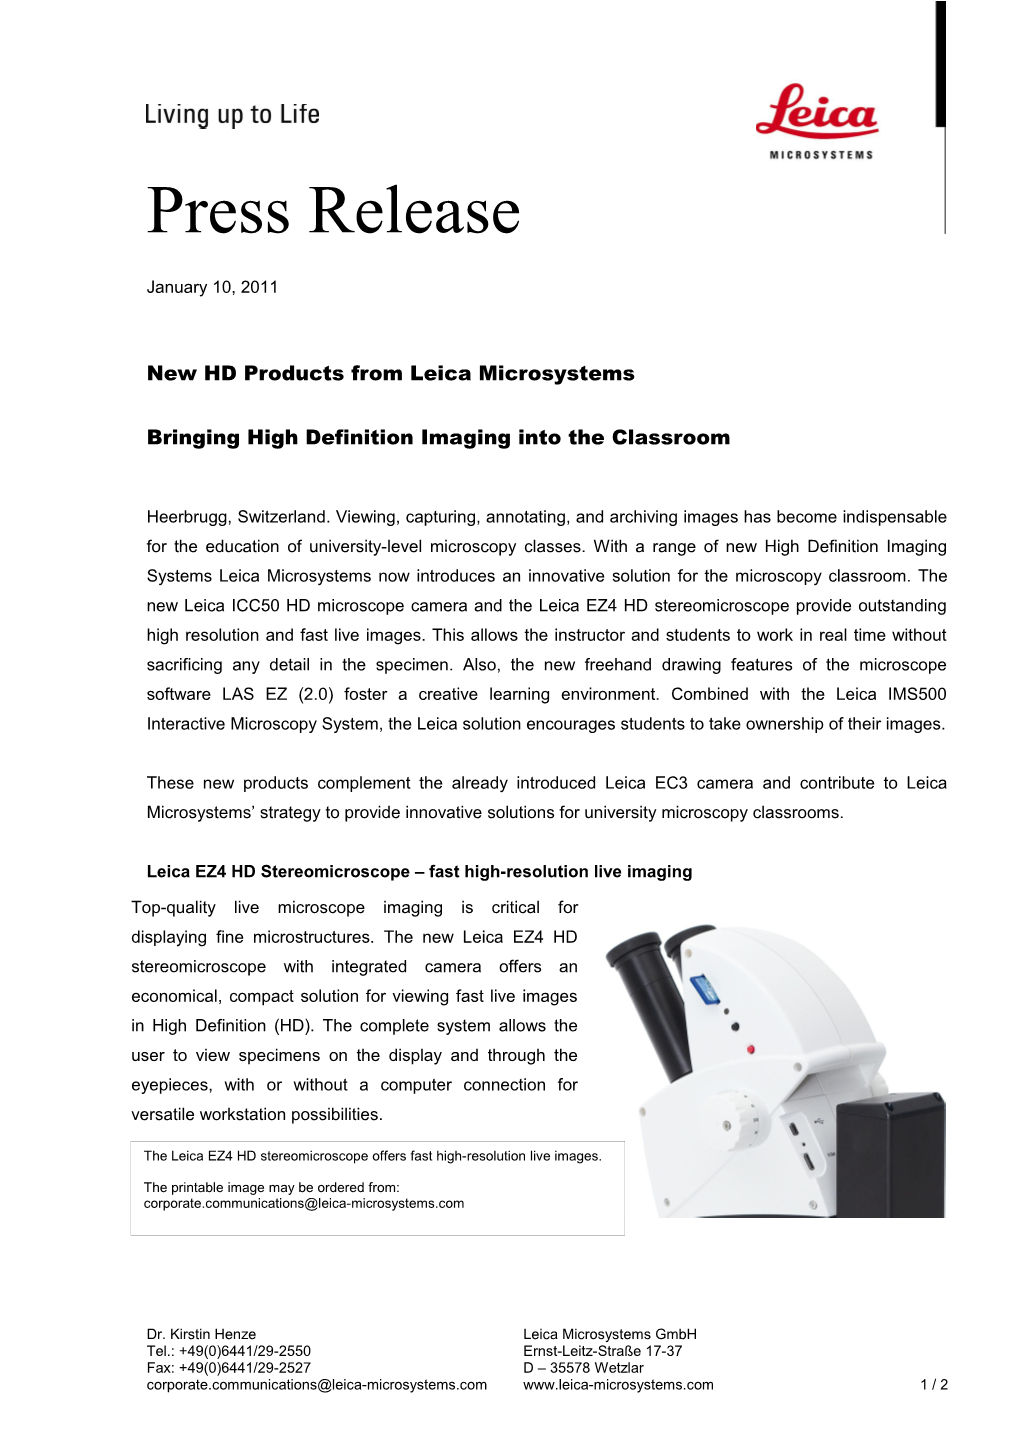 Leica Microsystems Press Release s5